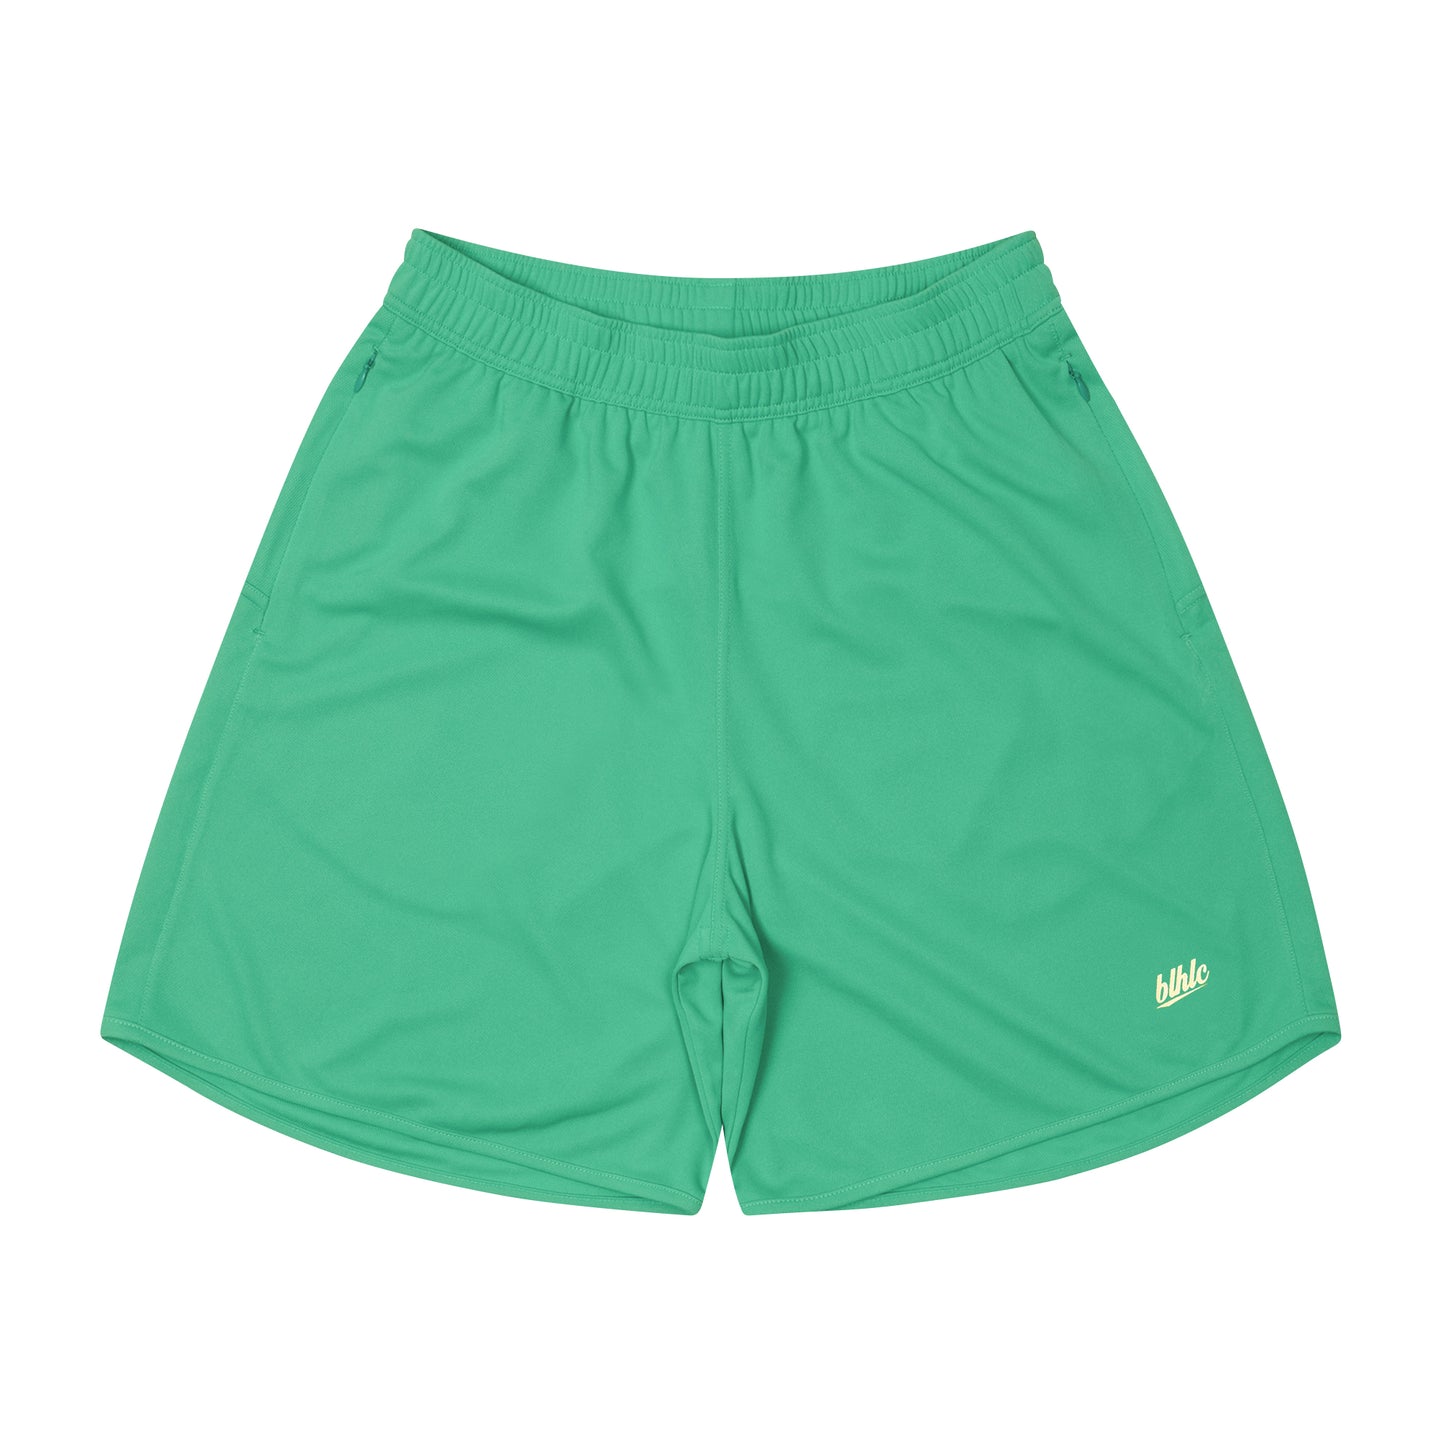 Basic Zip Shorts (sea green/ivory)